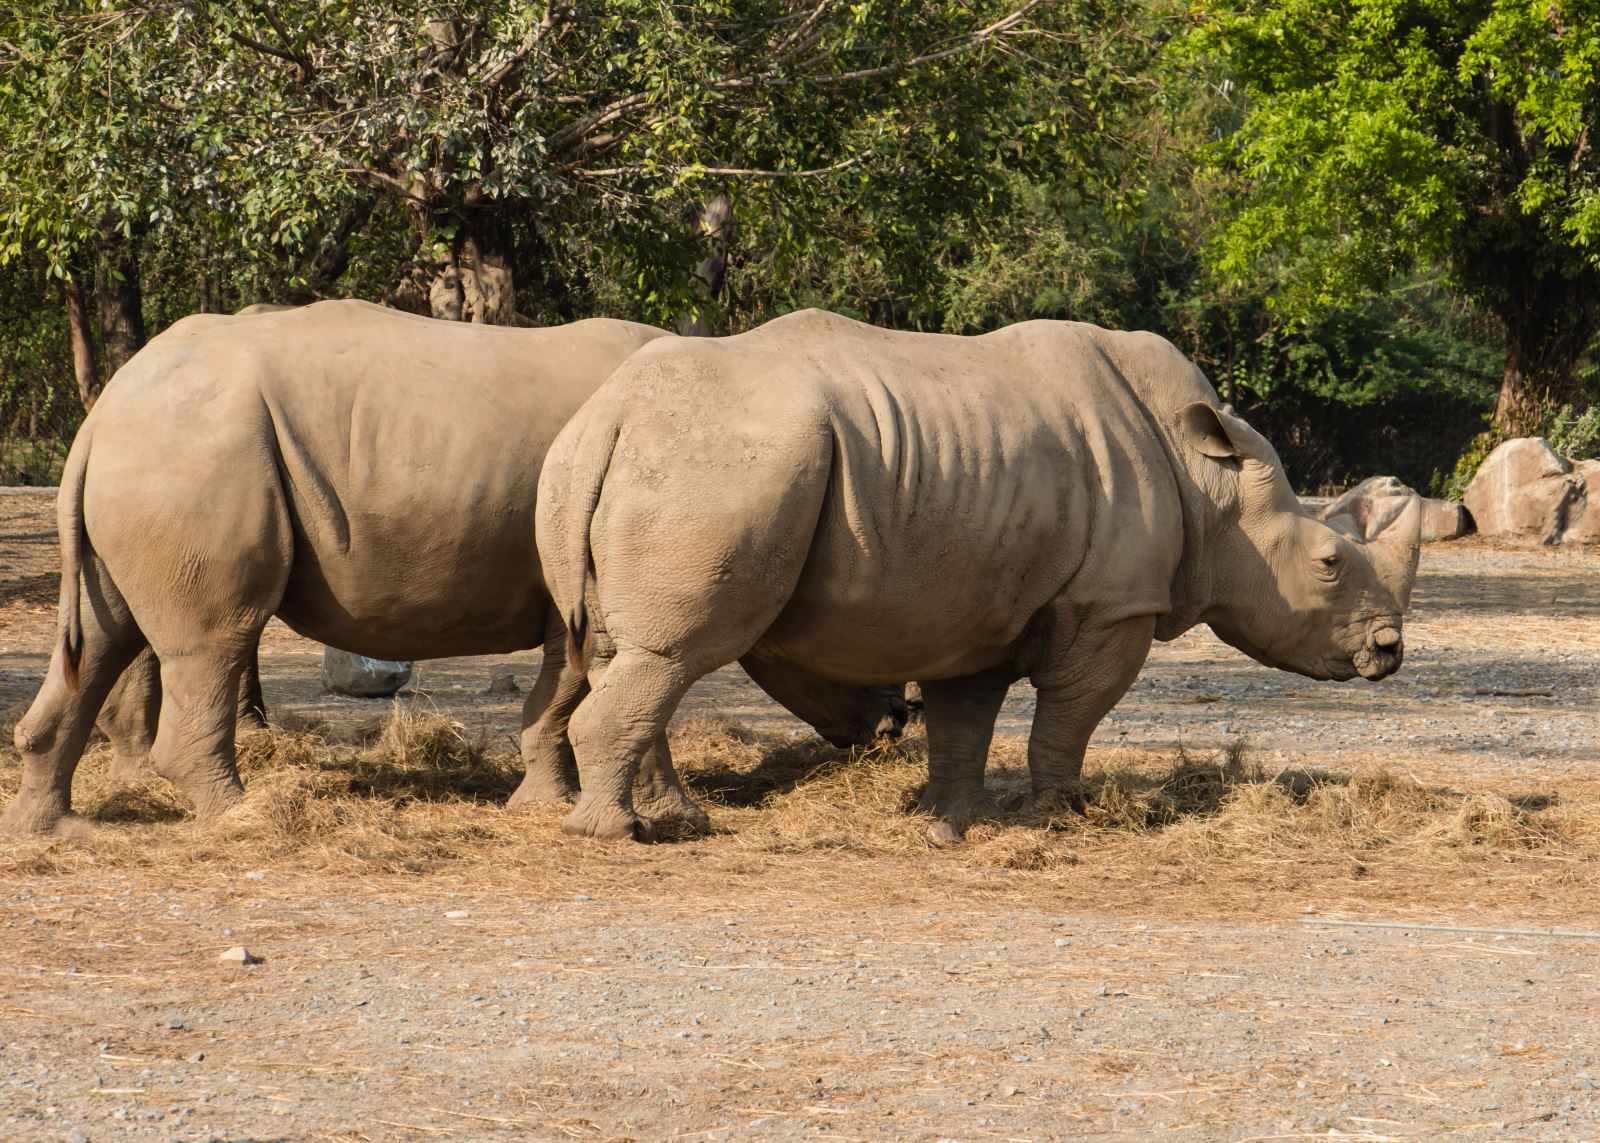 A rhinoceros at the safari world, bangkok thailand